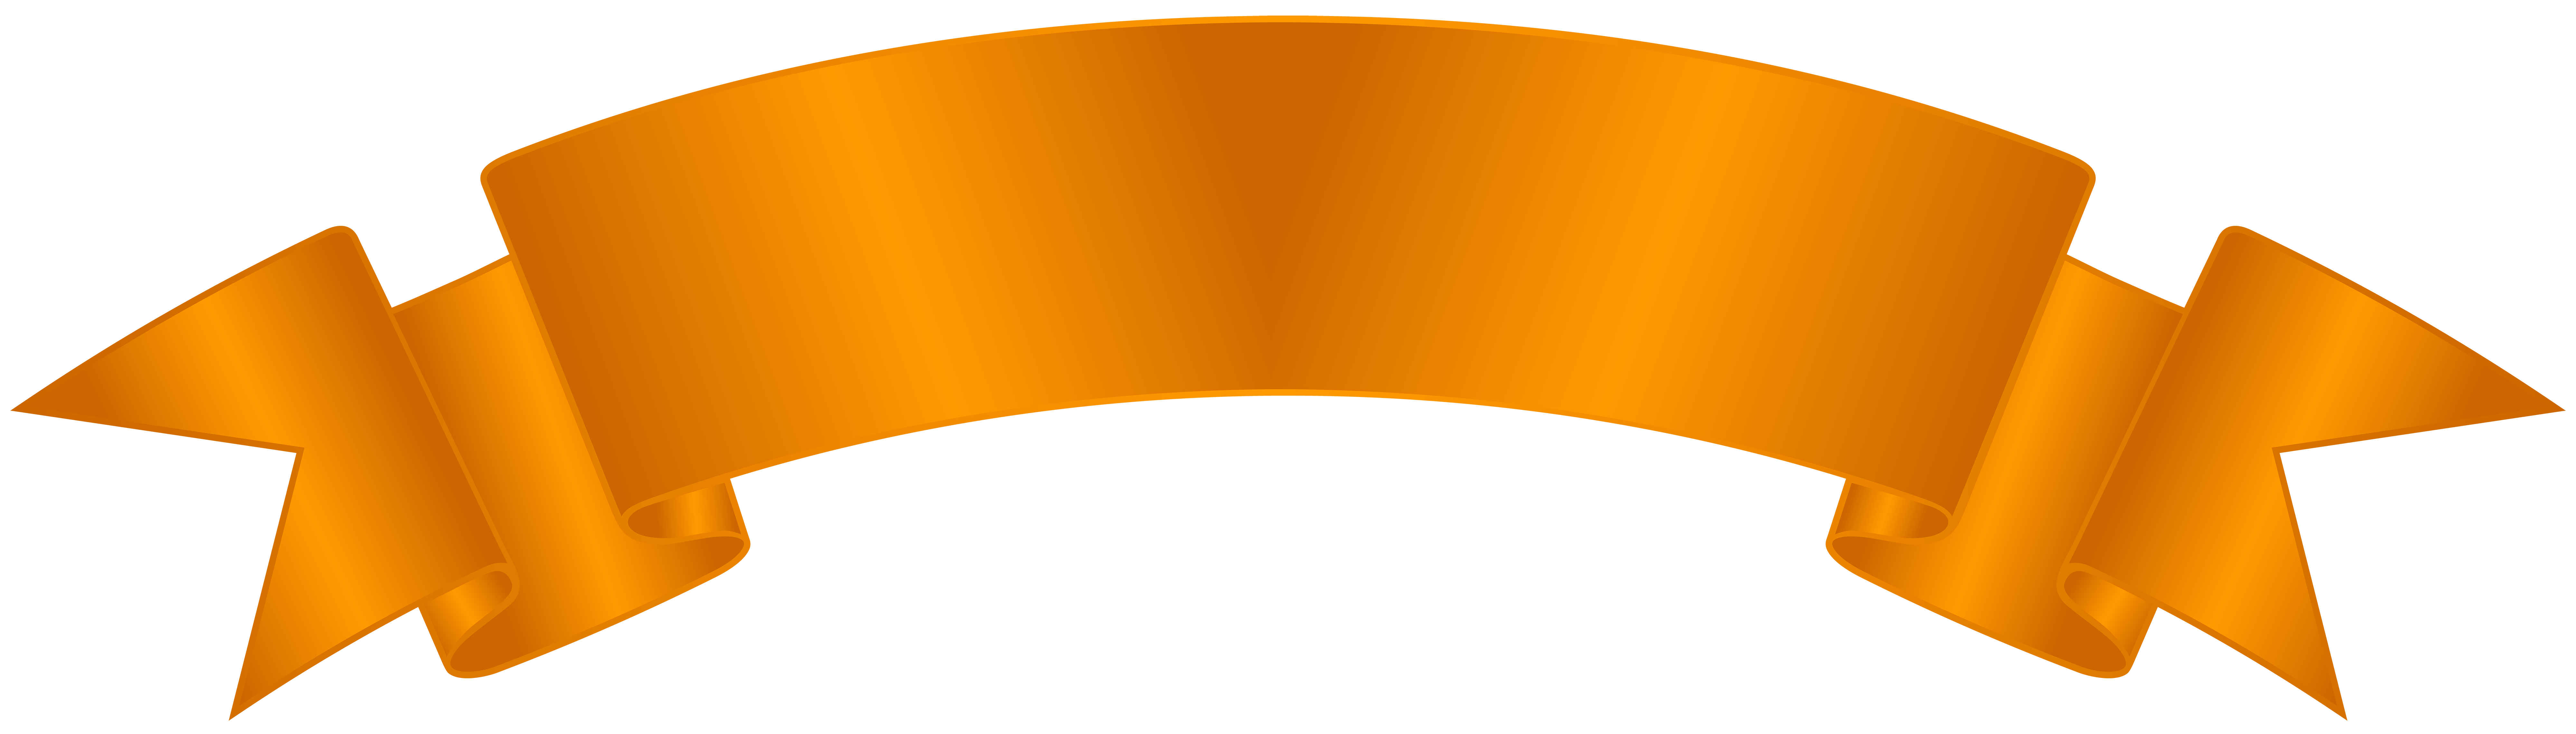 orange ribbon banner png - Clip Art Library